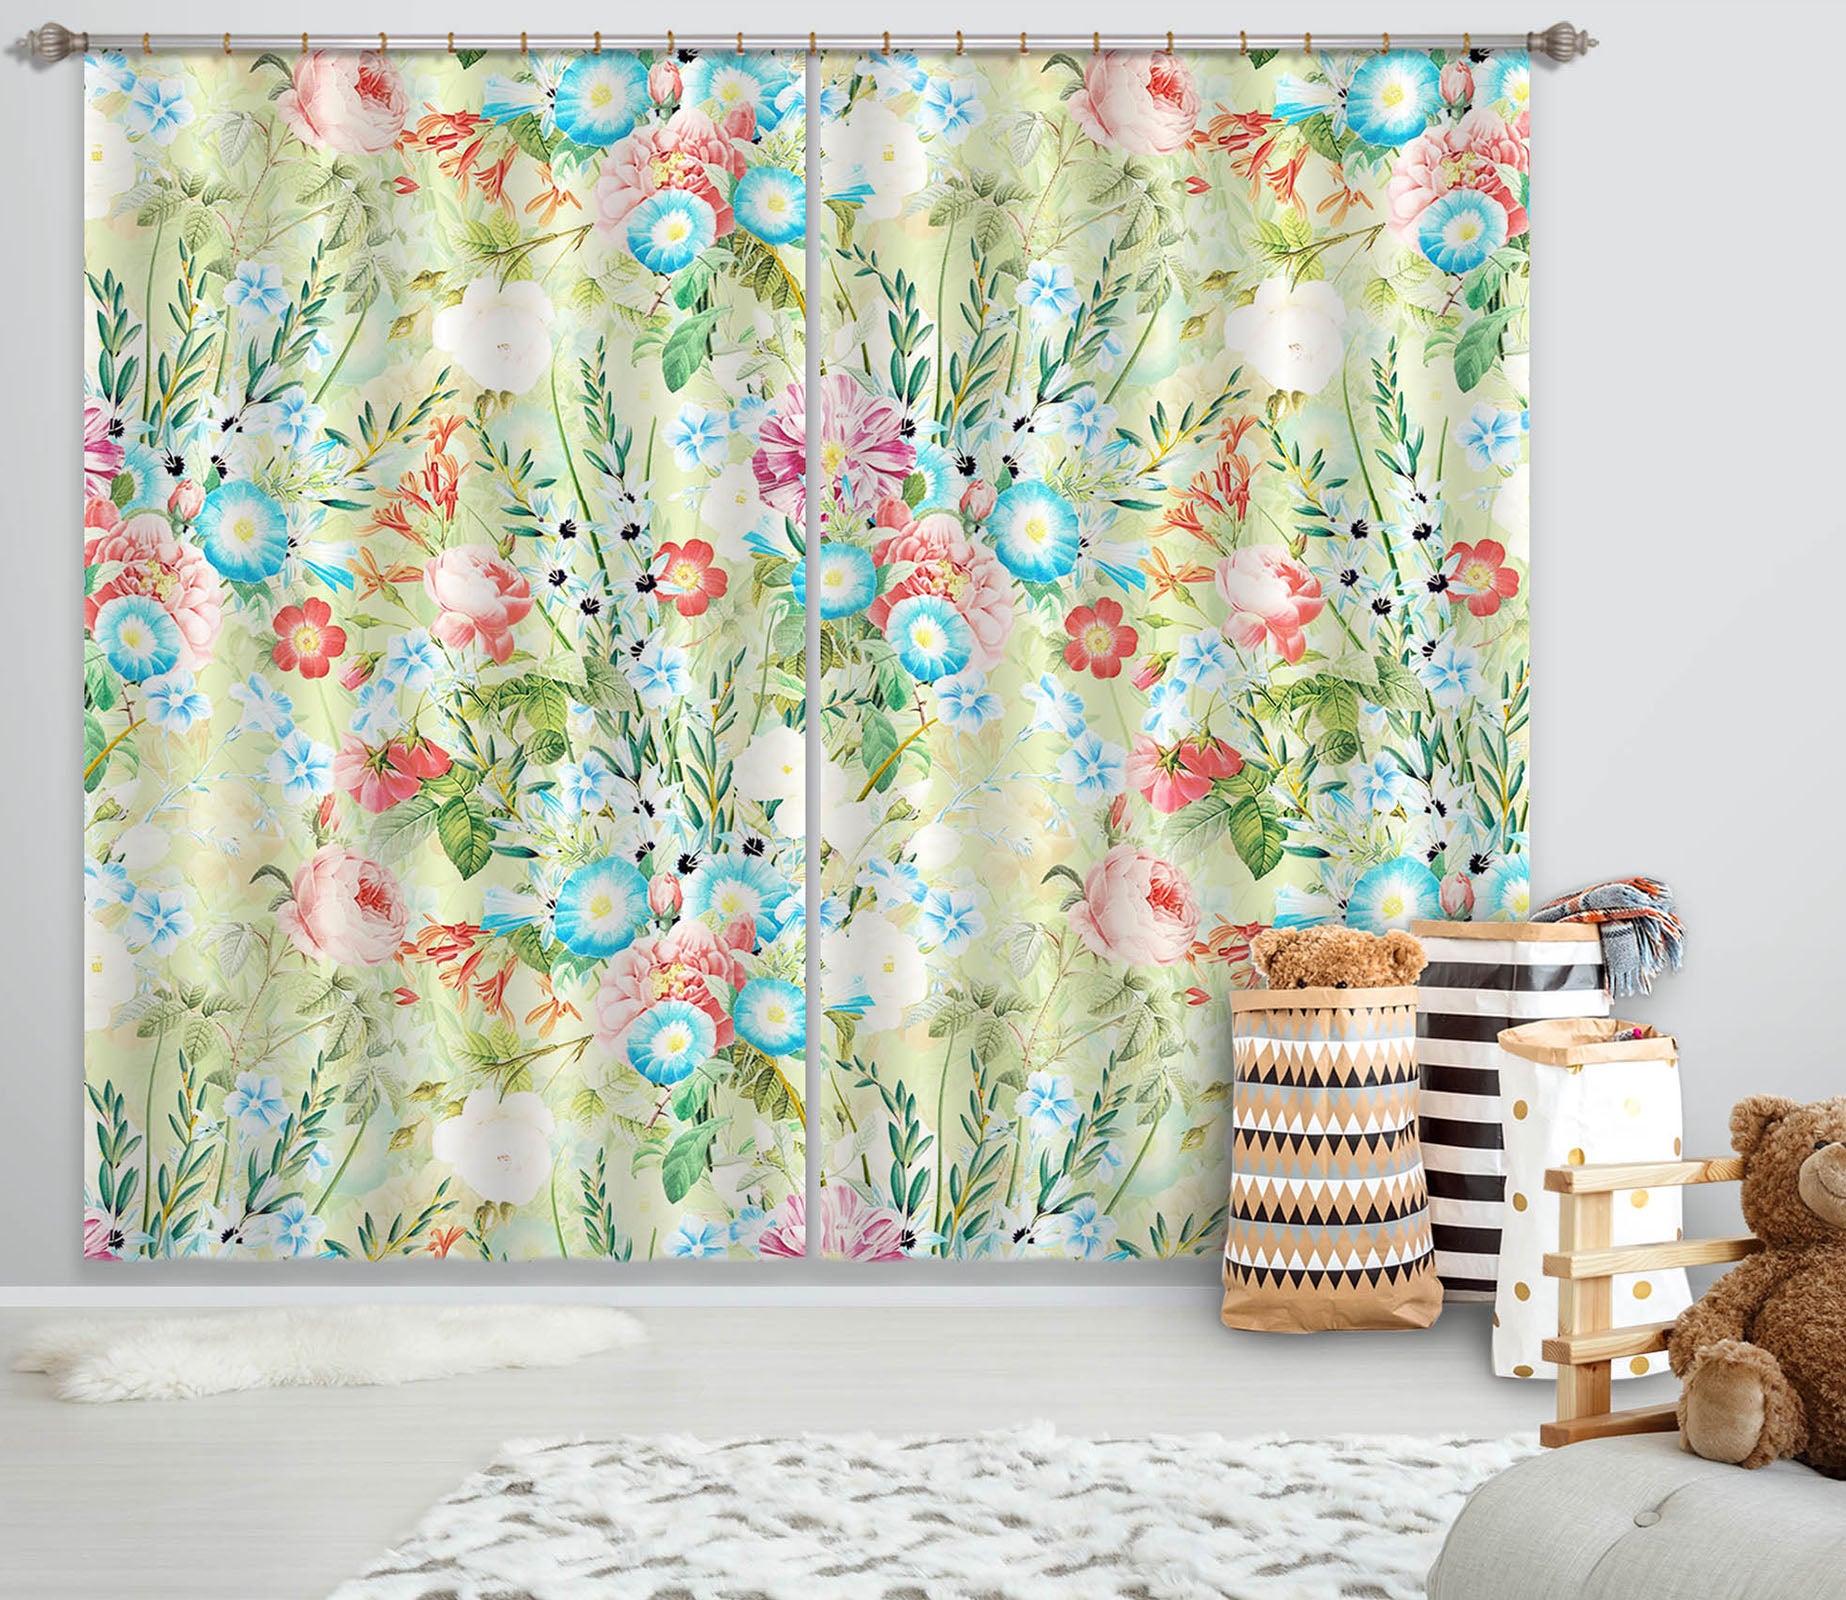 3D Fresh Flowers 148 Uta Naumann Curtain Curtains Drapes